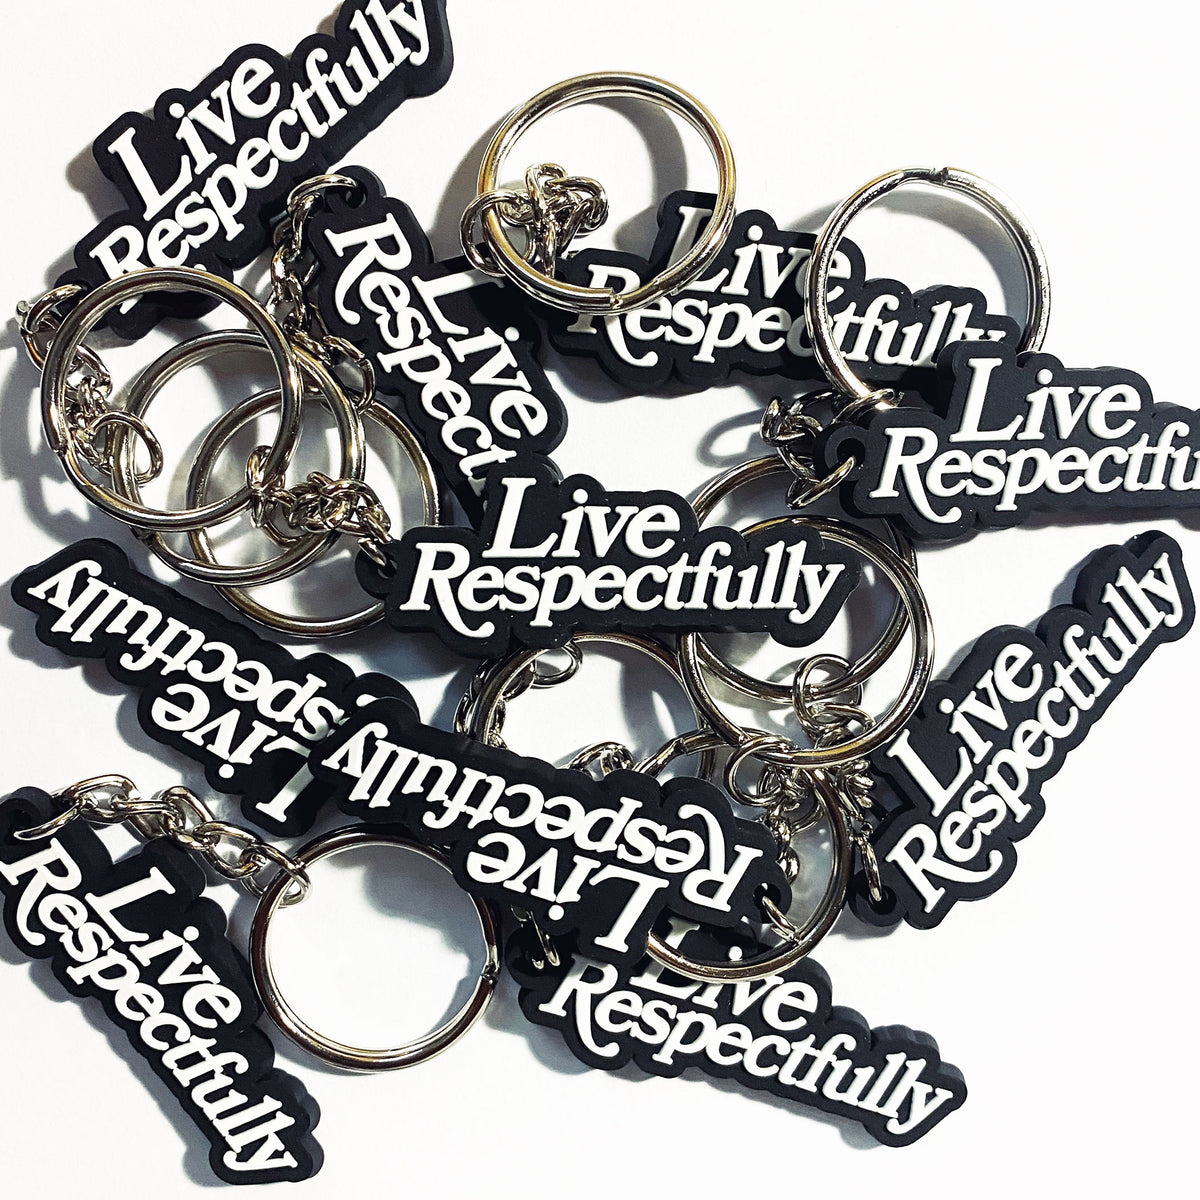 Live Respectfully Key chain